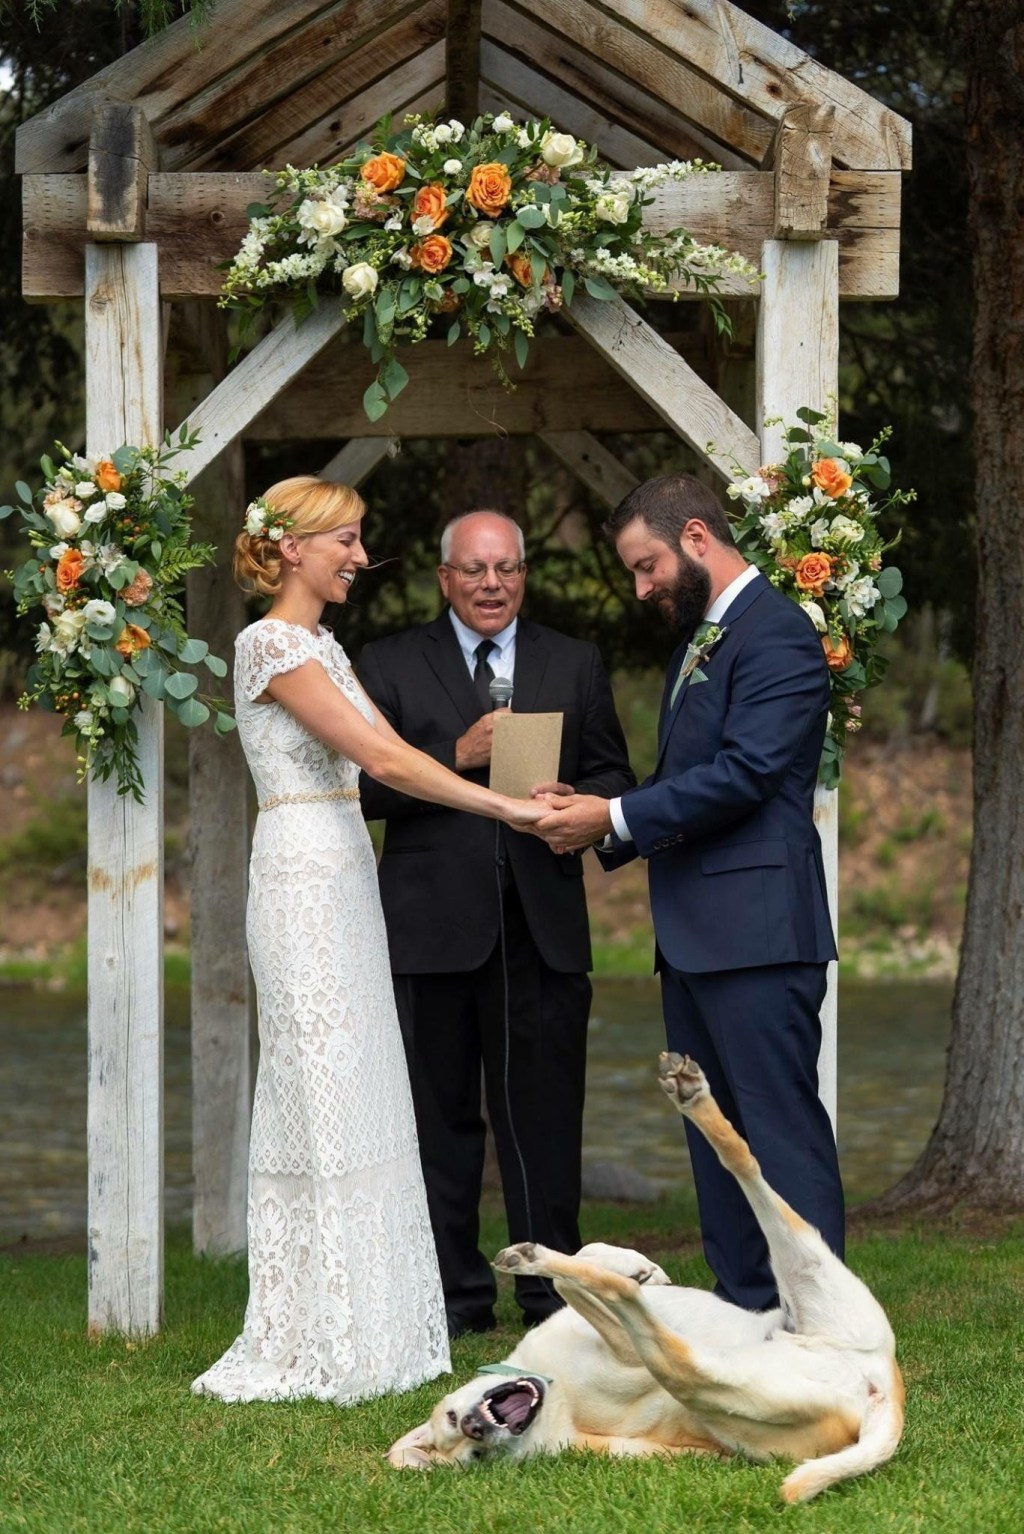 Labrador rouba a cena durante cerimônia de casamento dos donos